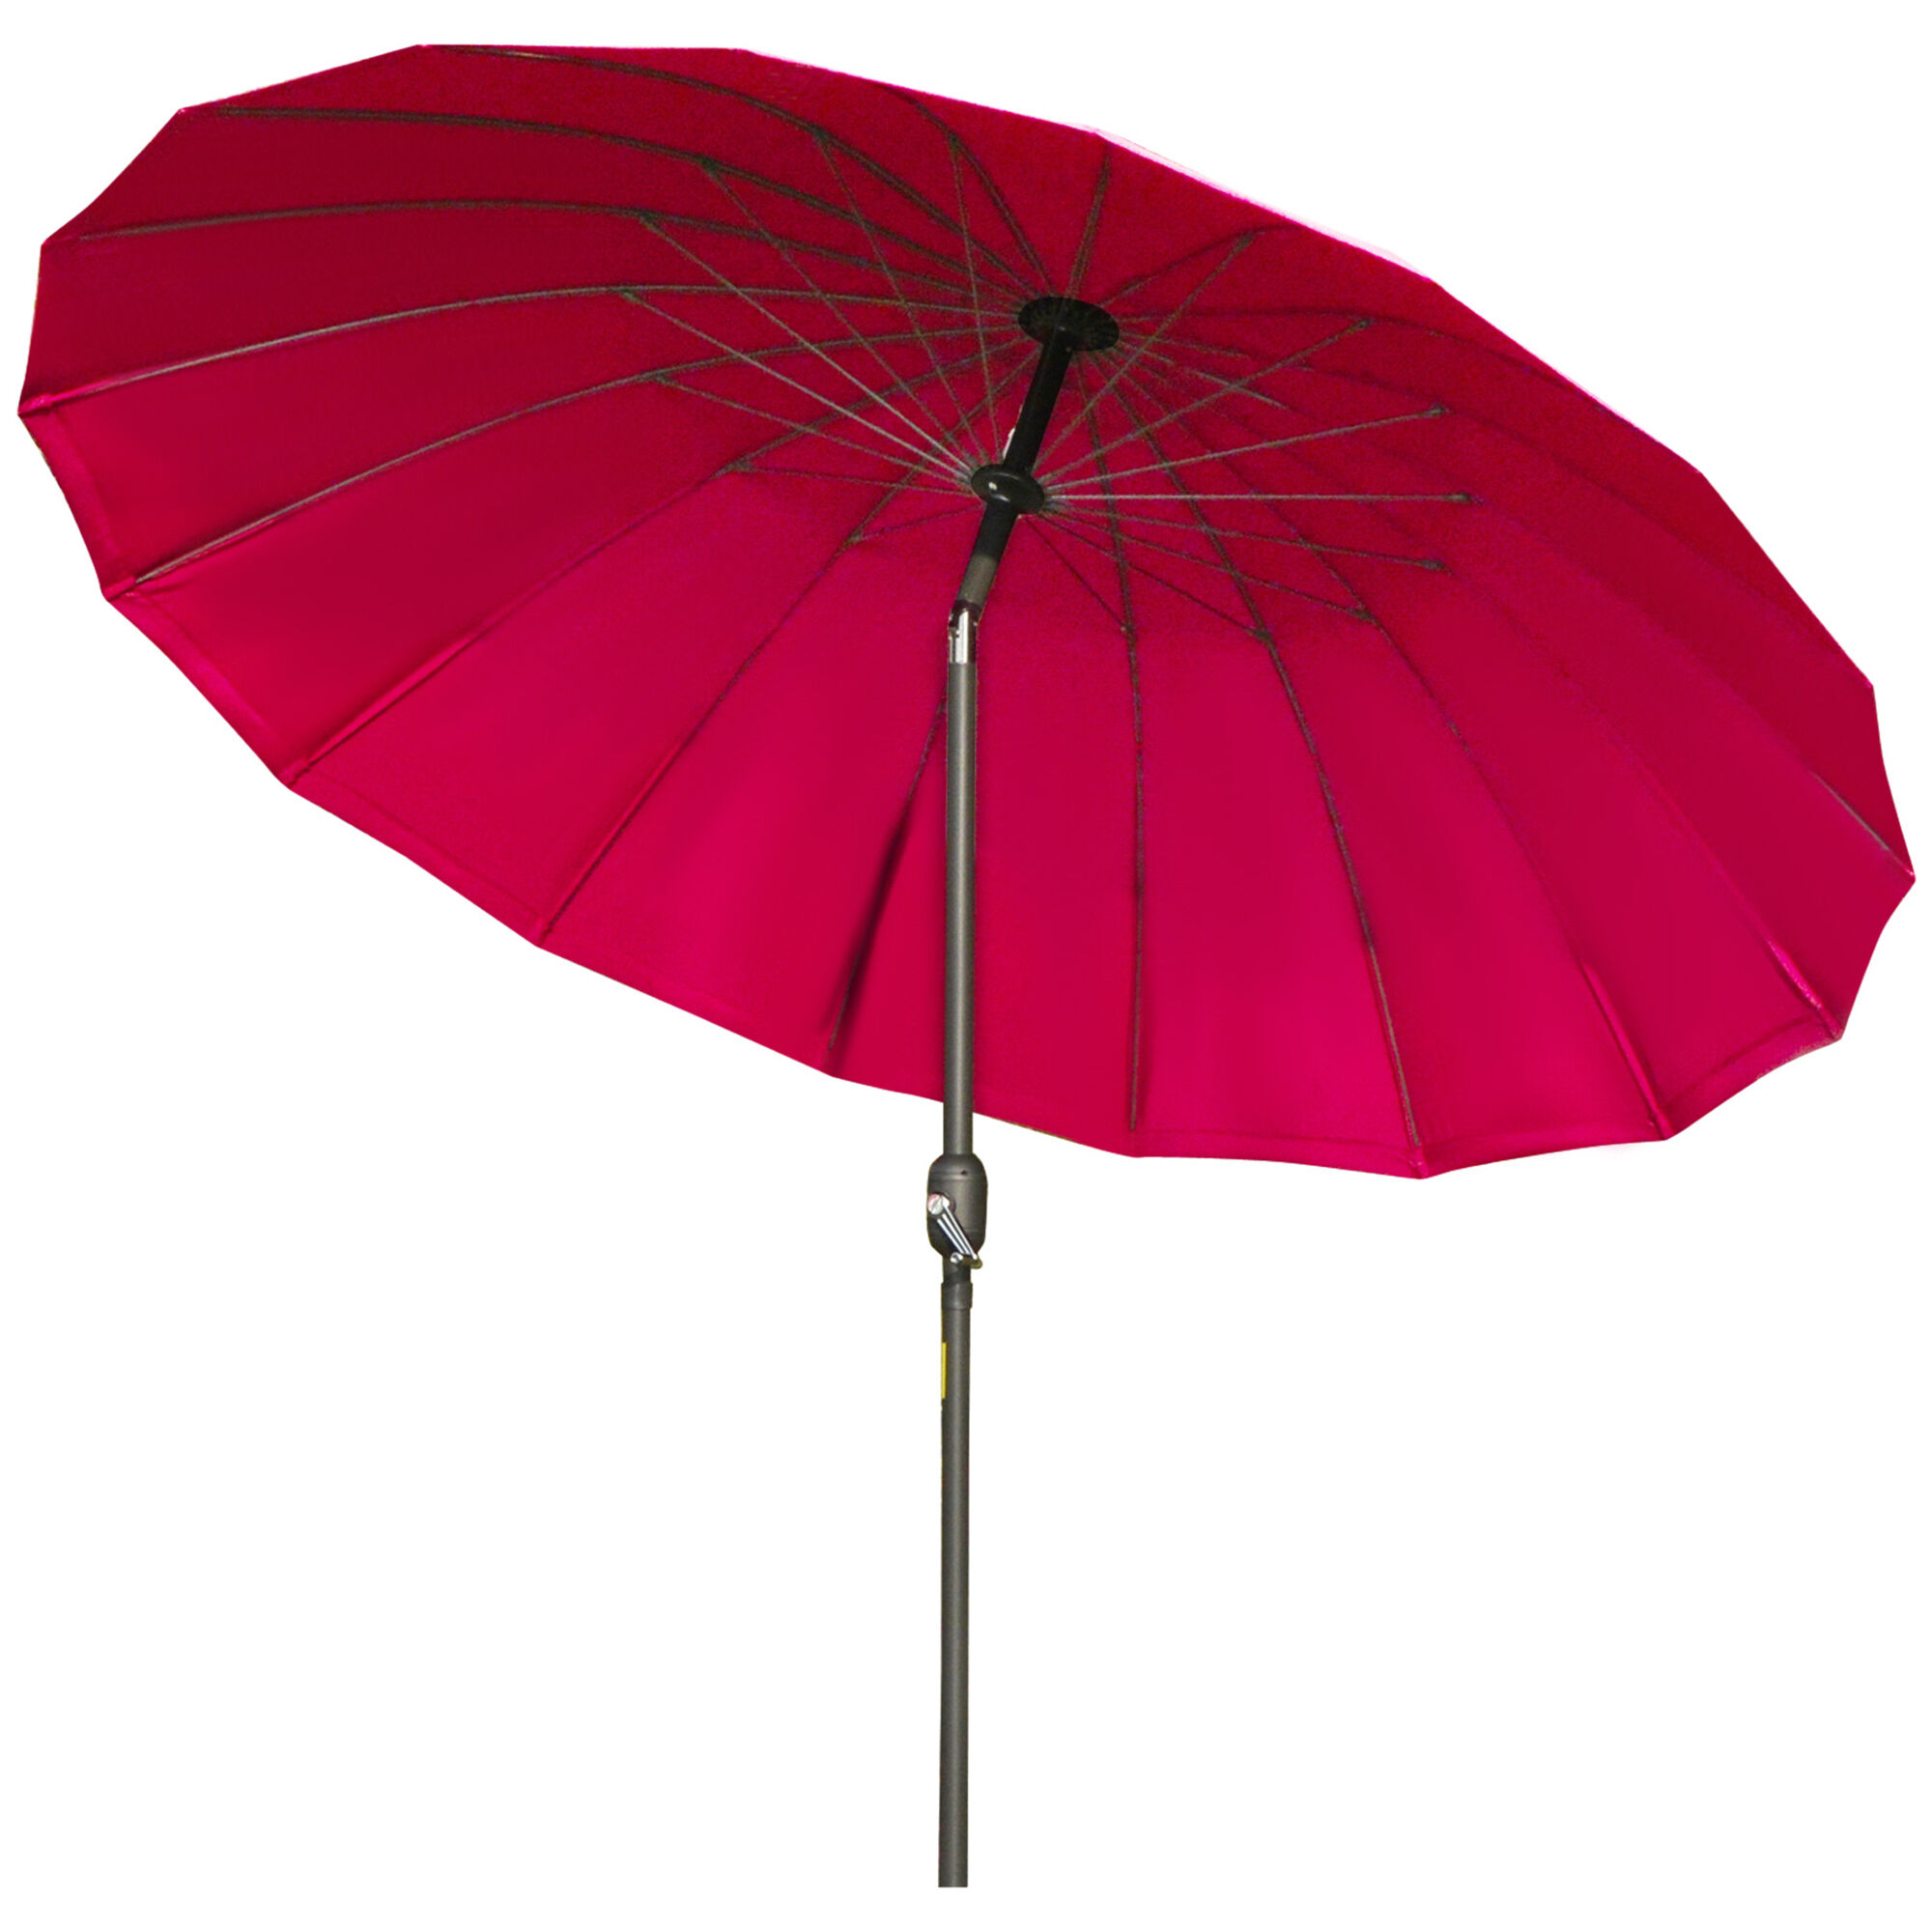 Outsunny 255cm Garden Parasol, Outdoor Table Umbrella with Tilt, Crank, and Durable Ribs, Wine Red